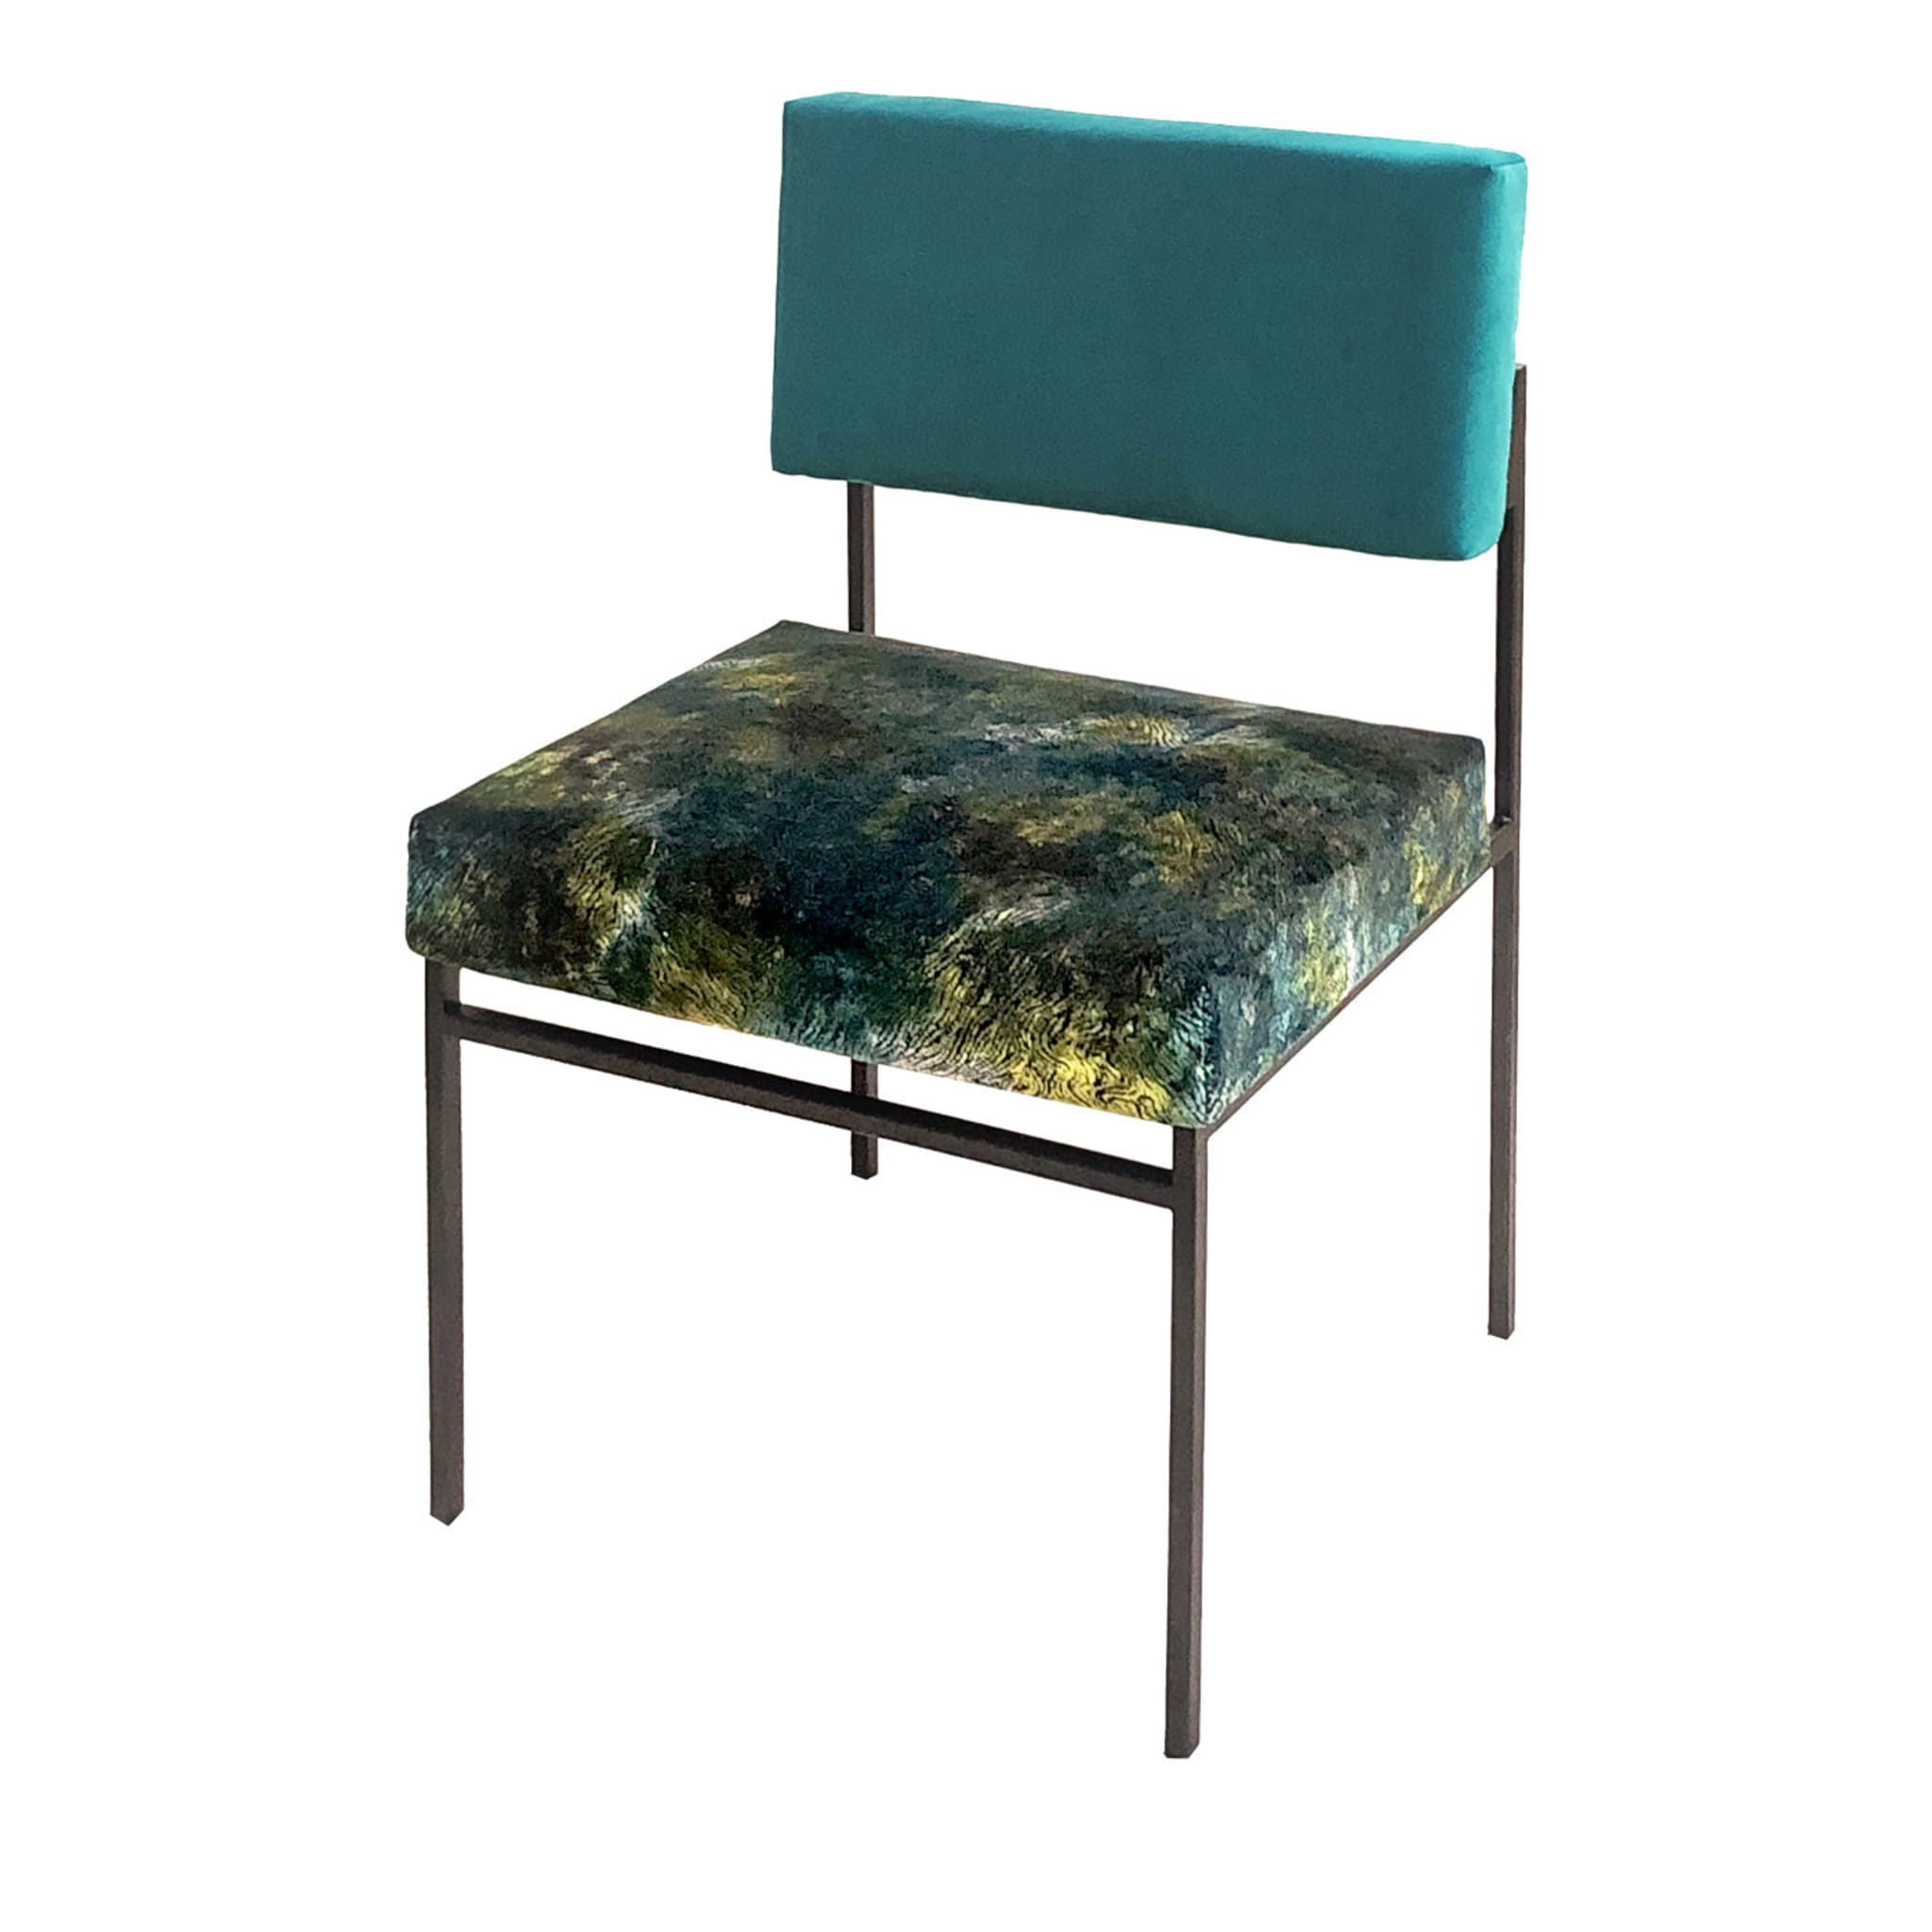 Aurea Green Velvet Chair by CtrlZak and Davide Barzaghi - Main view